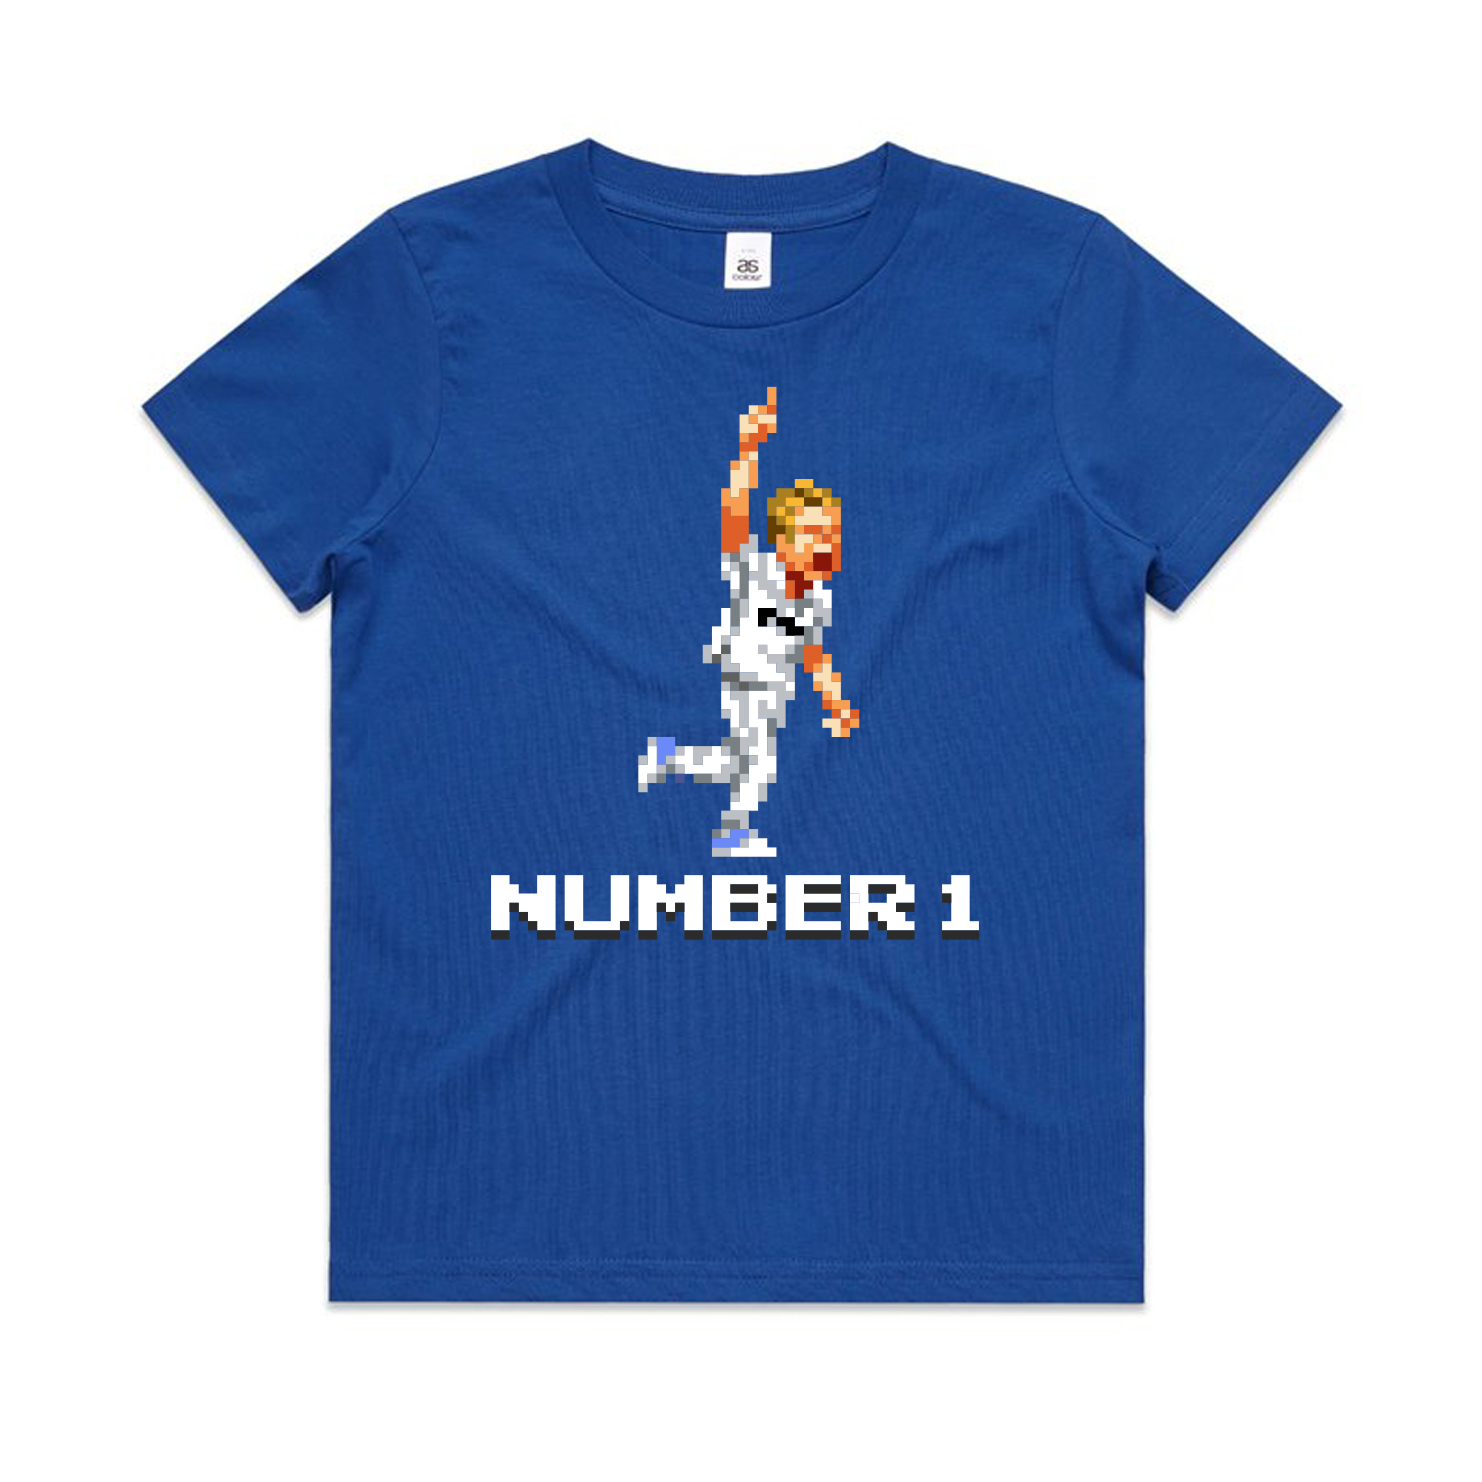 Number 1 cricket blue t-shirt kids